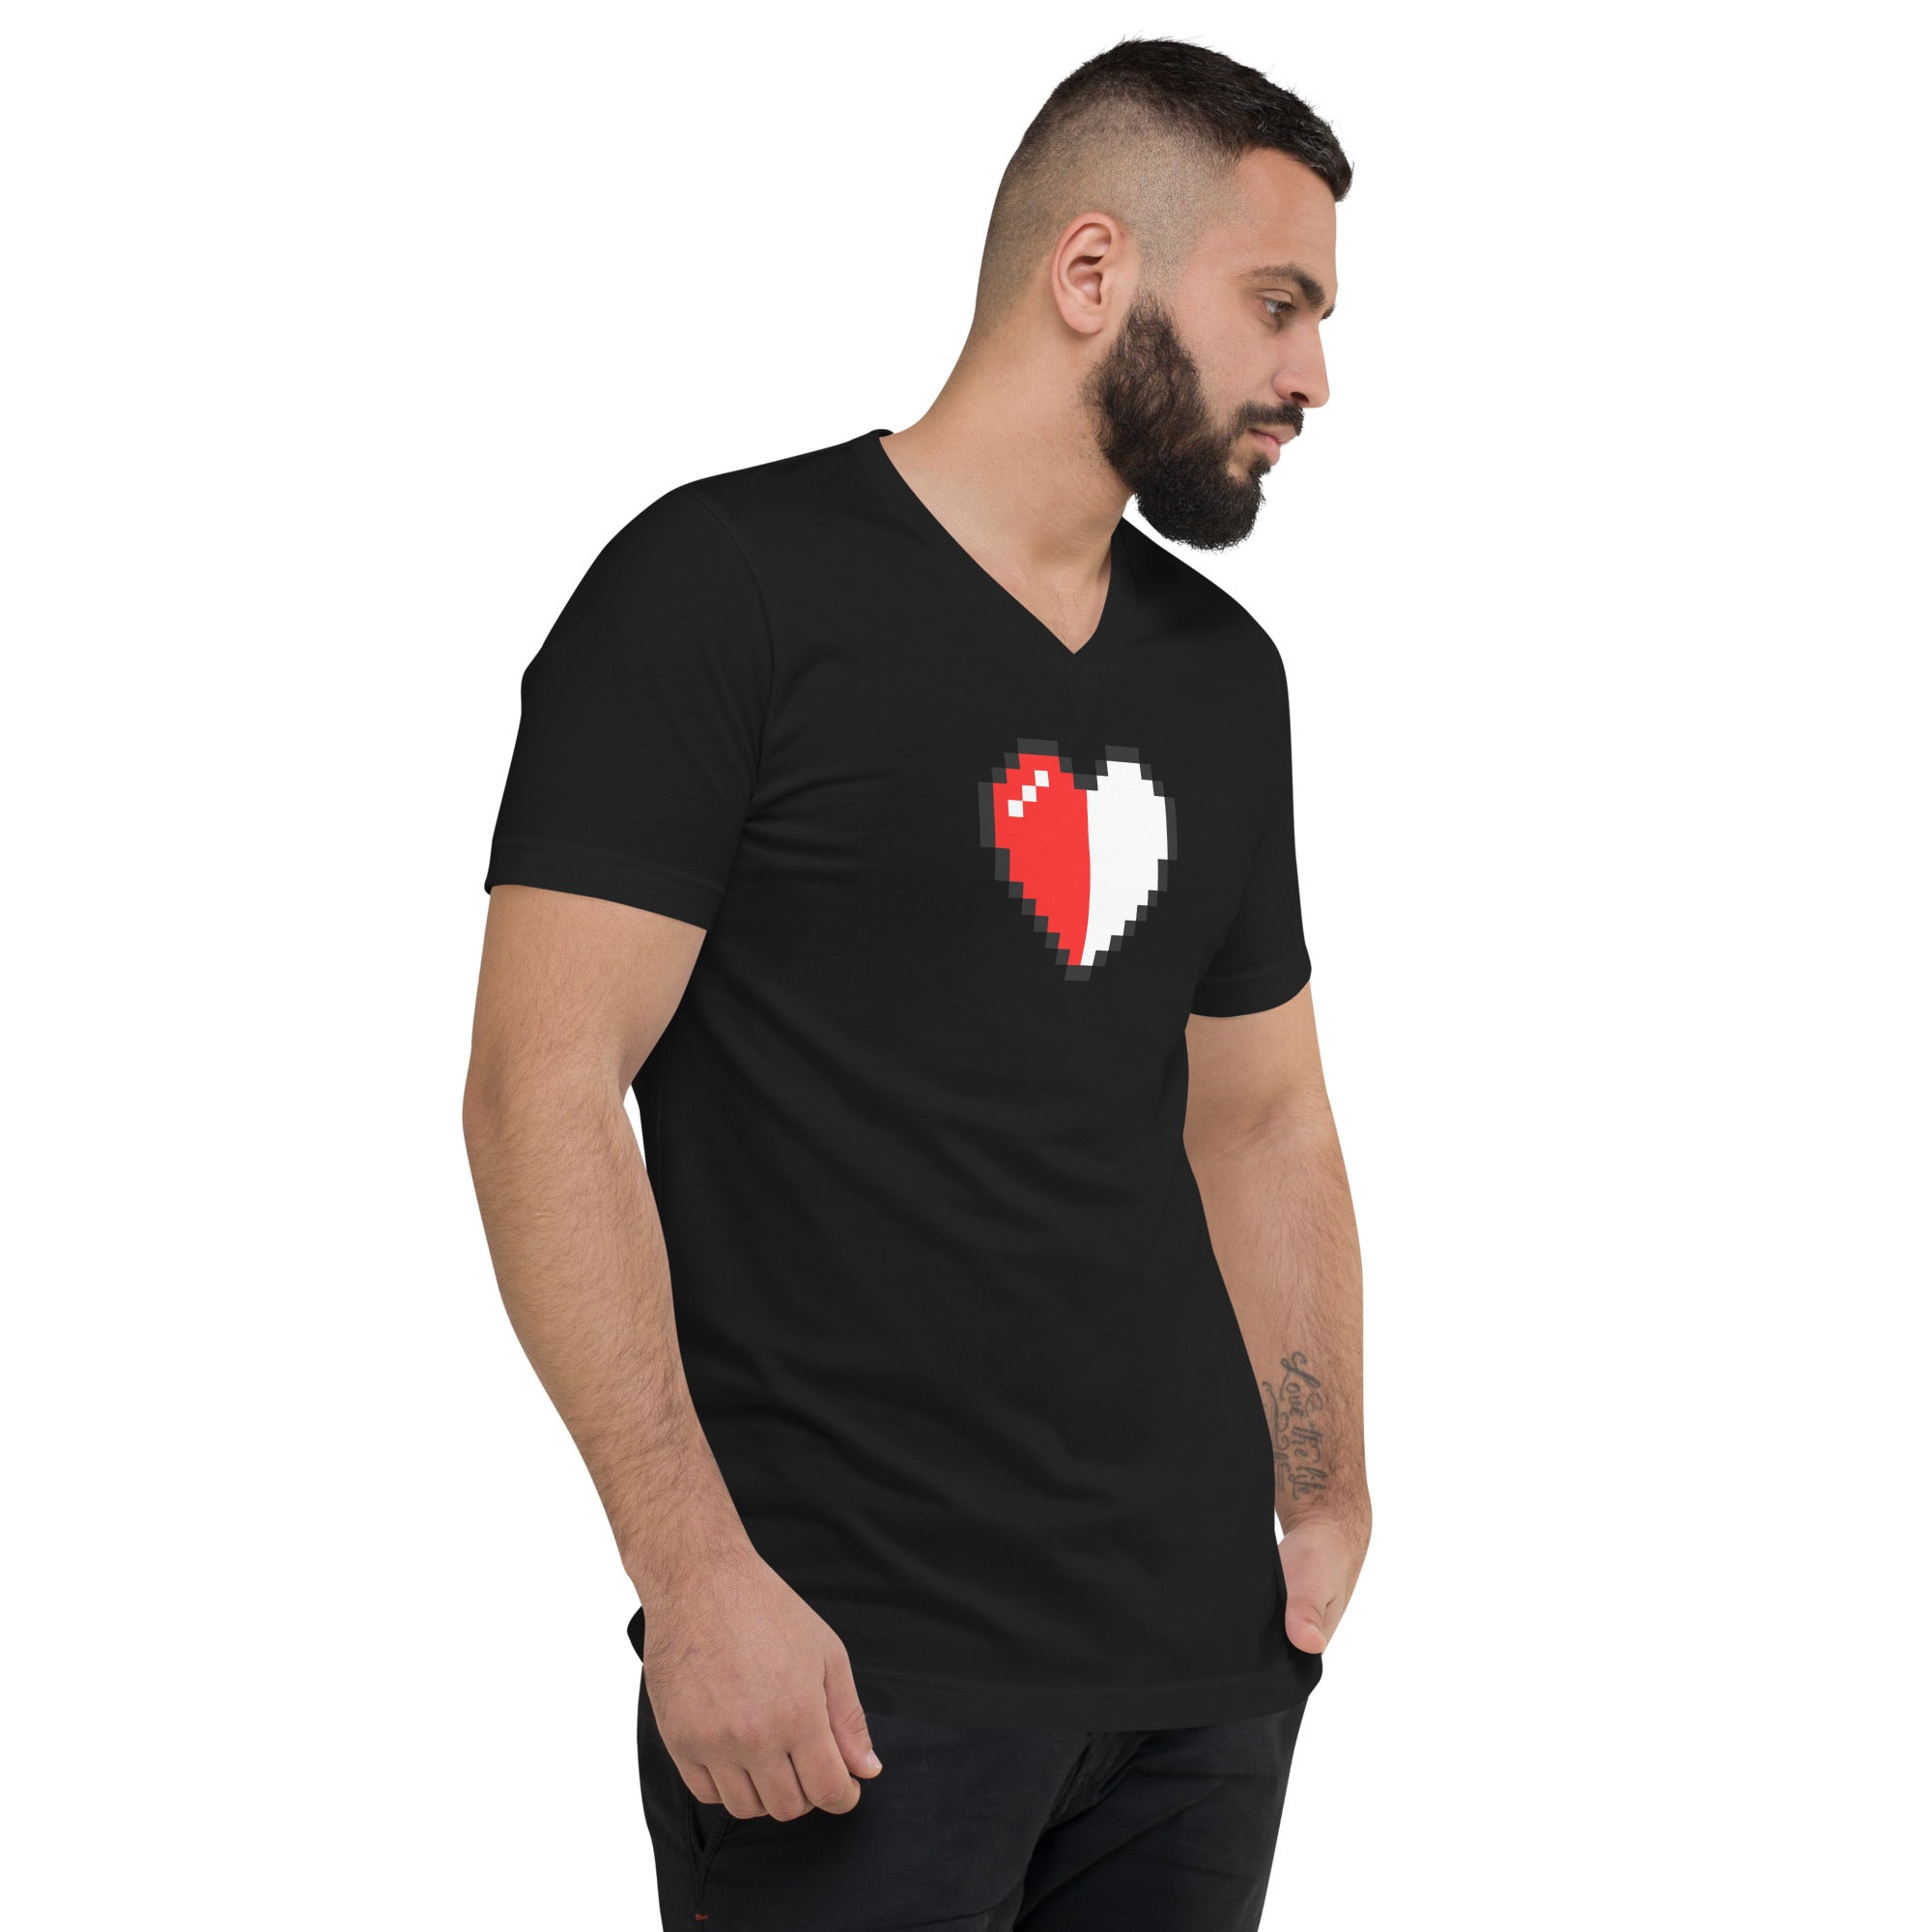 Retro 8 Bit Video Game Pixelated Half Heart Short Sleeve V-Neck T-Shirt